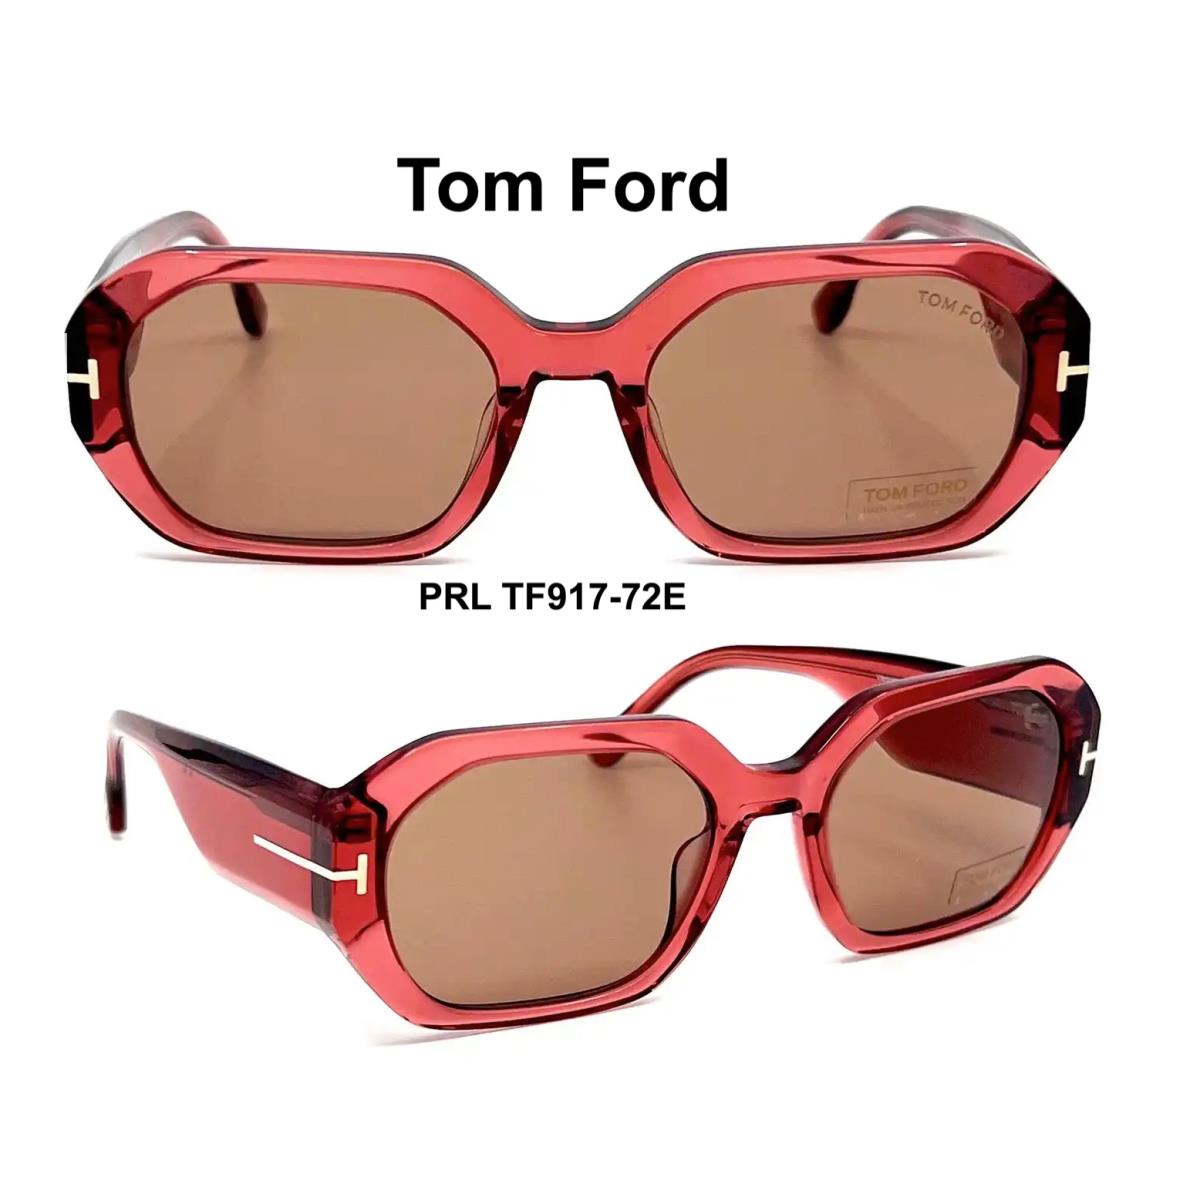 Tom Ford TF 917 72E Veronique Sunglasses Pink Brown FT 917 72E